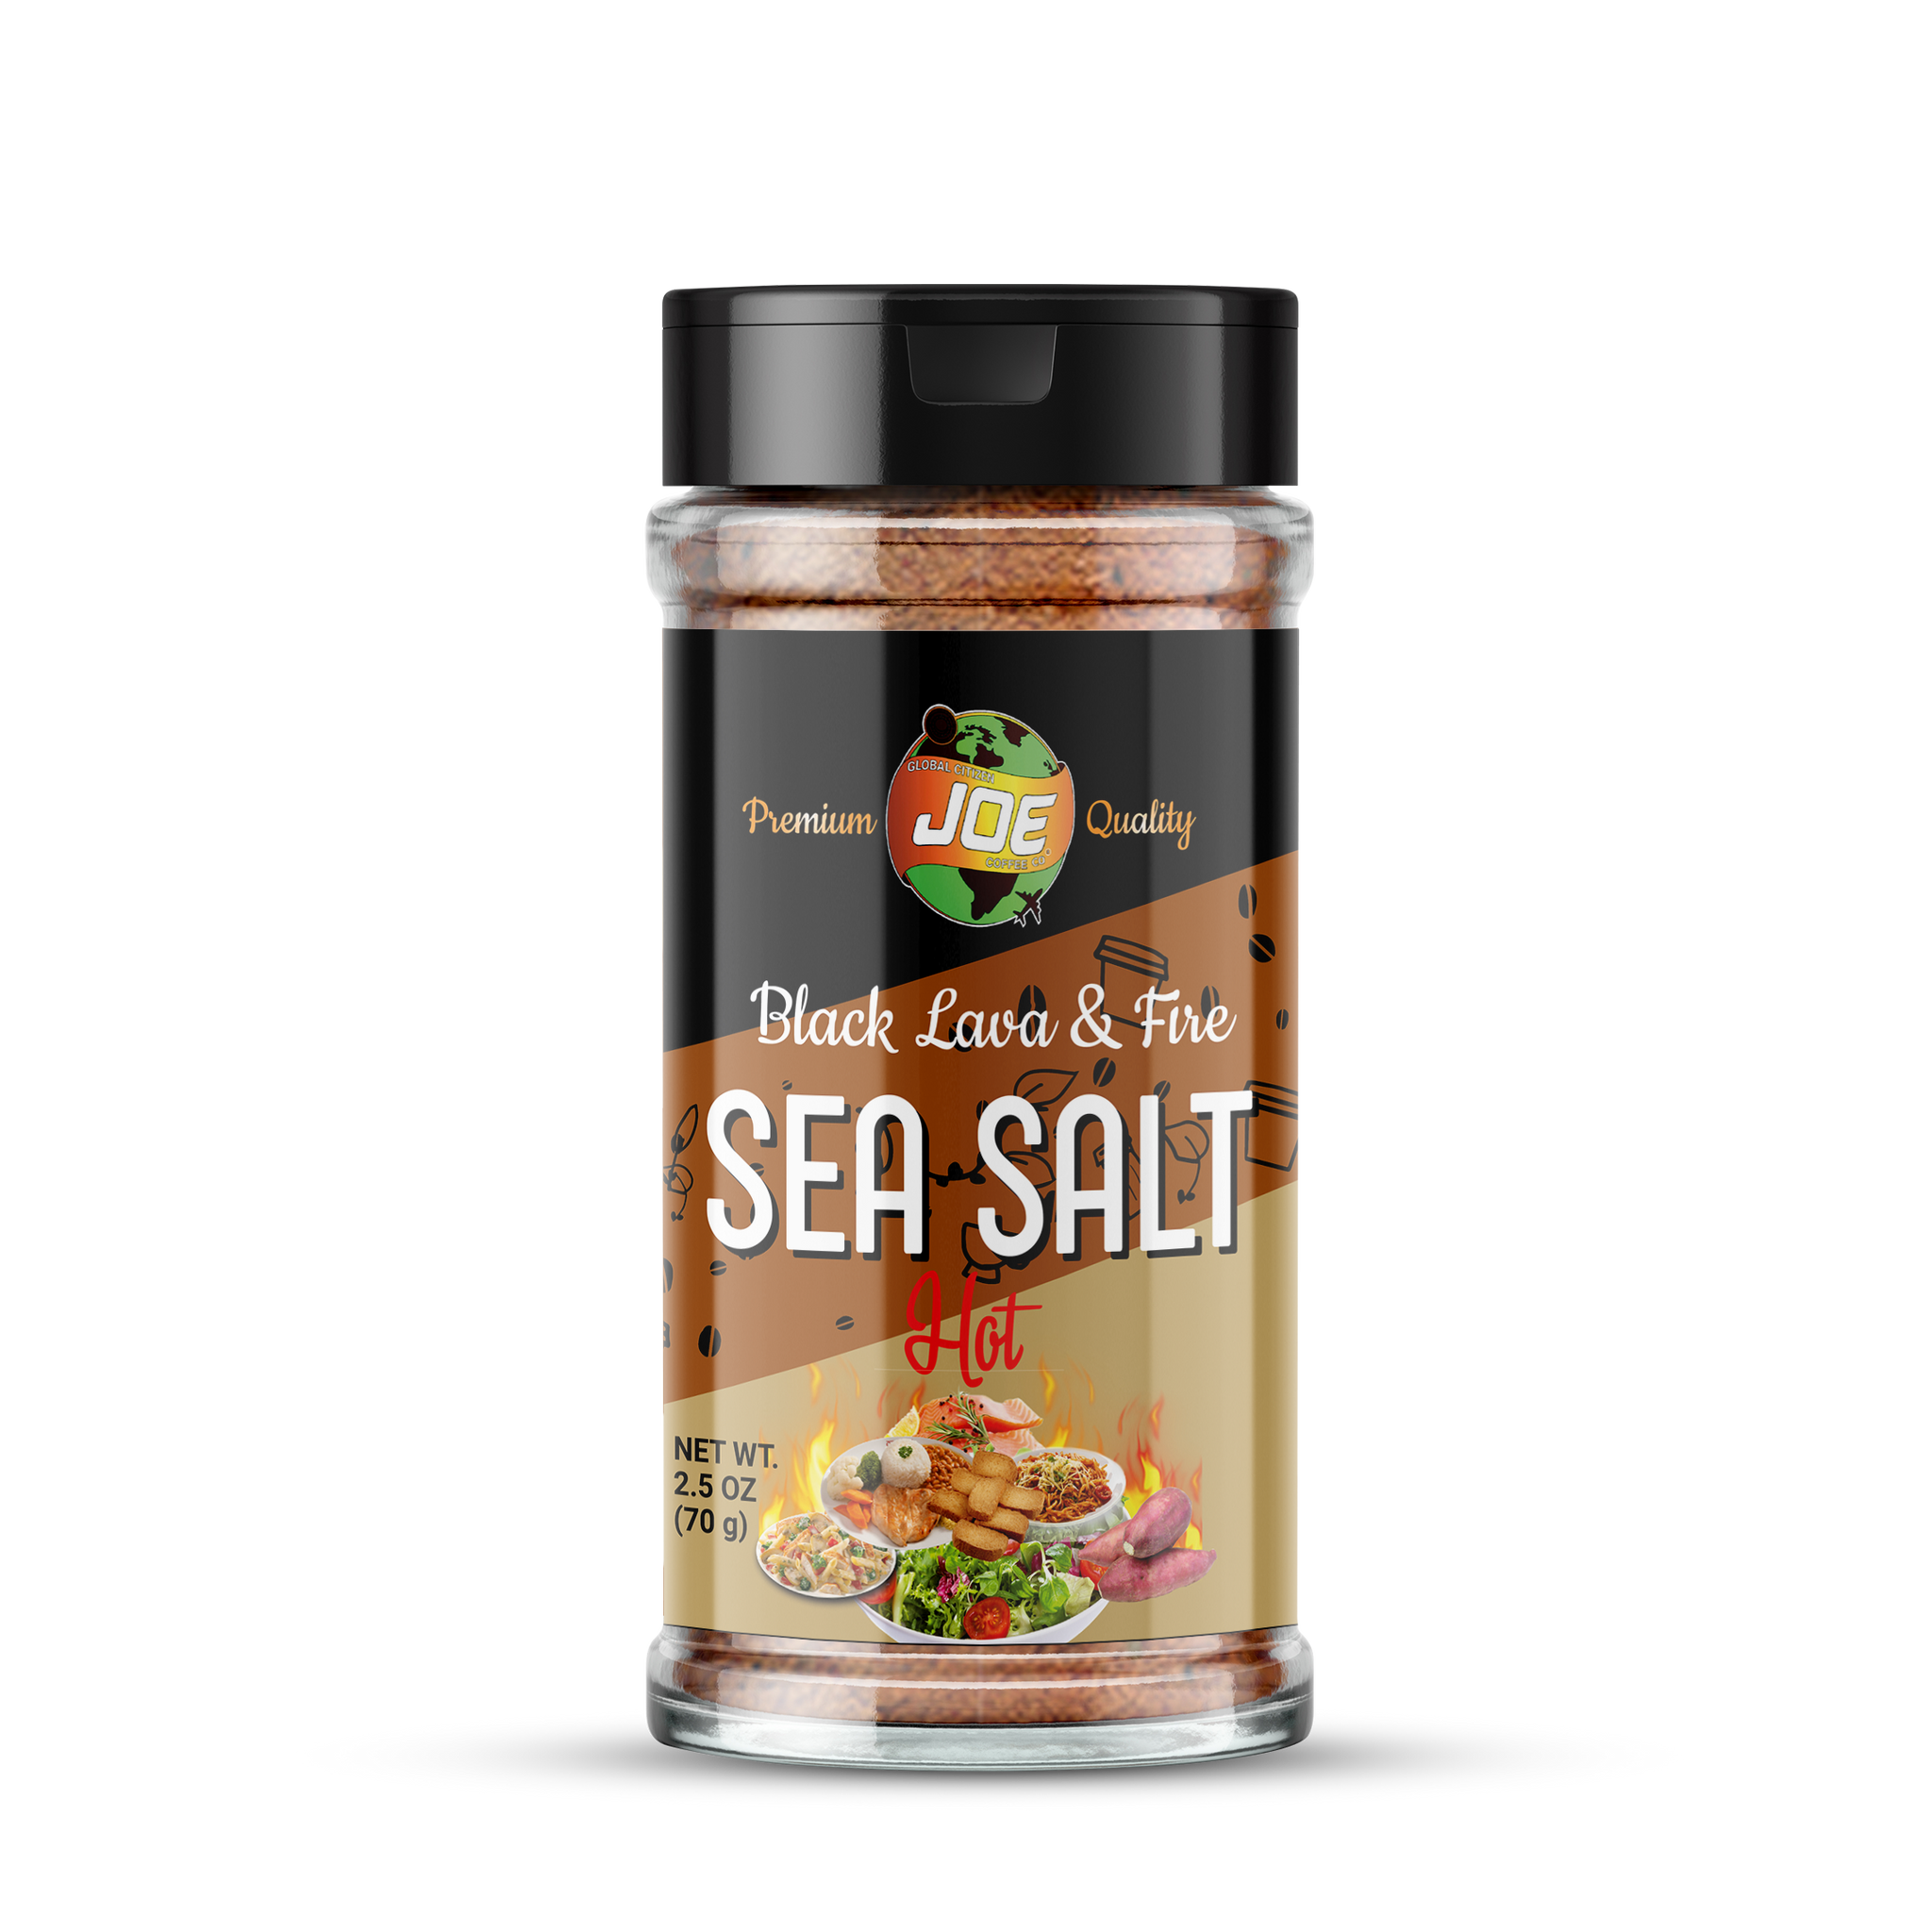 Black lava & Fire Coffee Sea Salt Spice Seasoning Hot